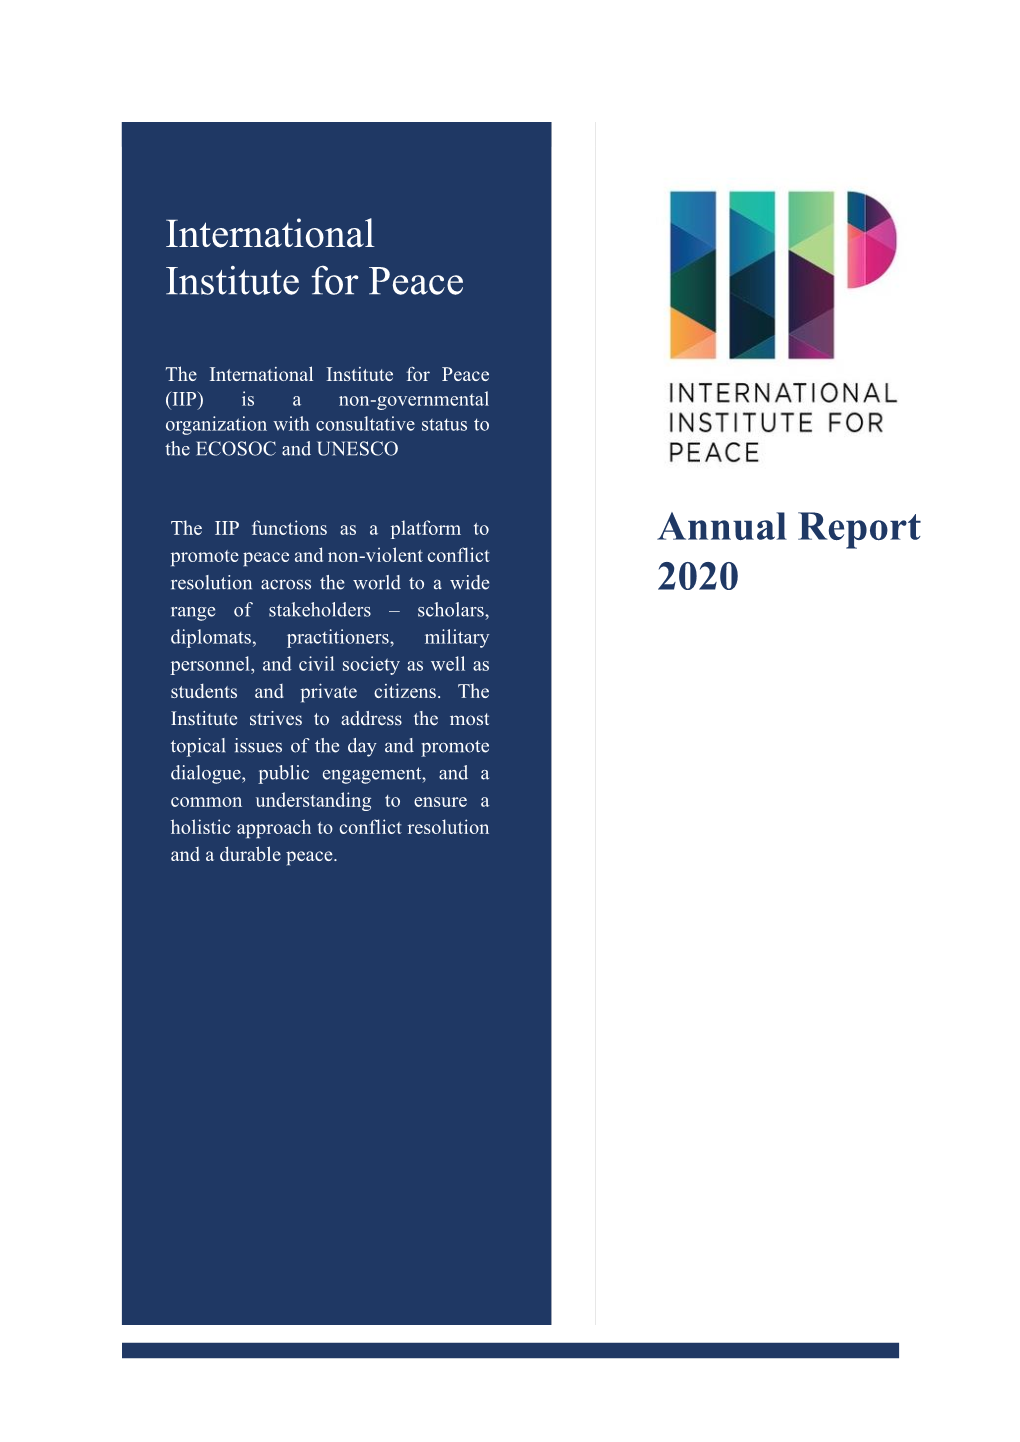 International Institute for Peace Annual Report 2020